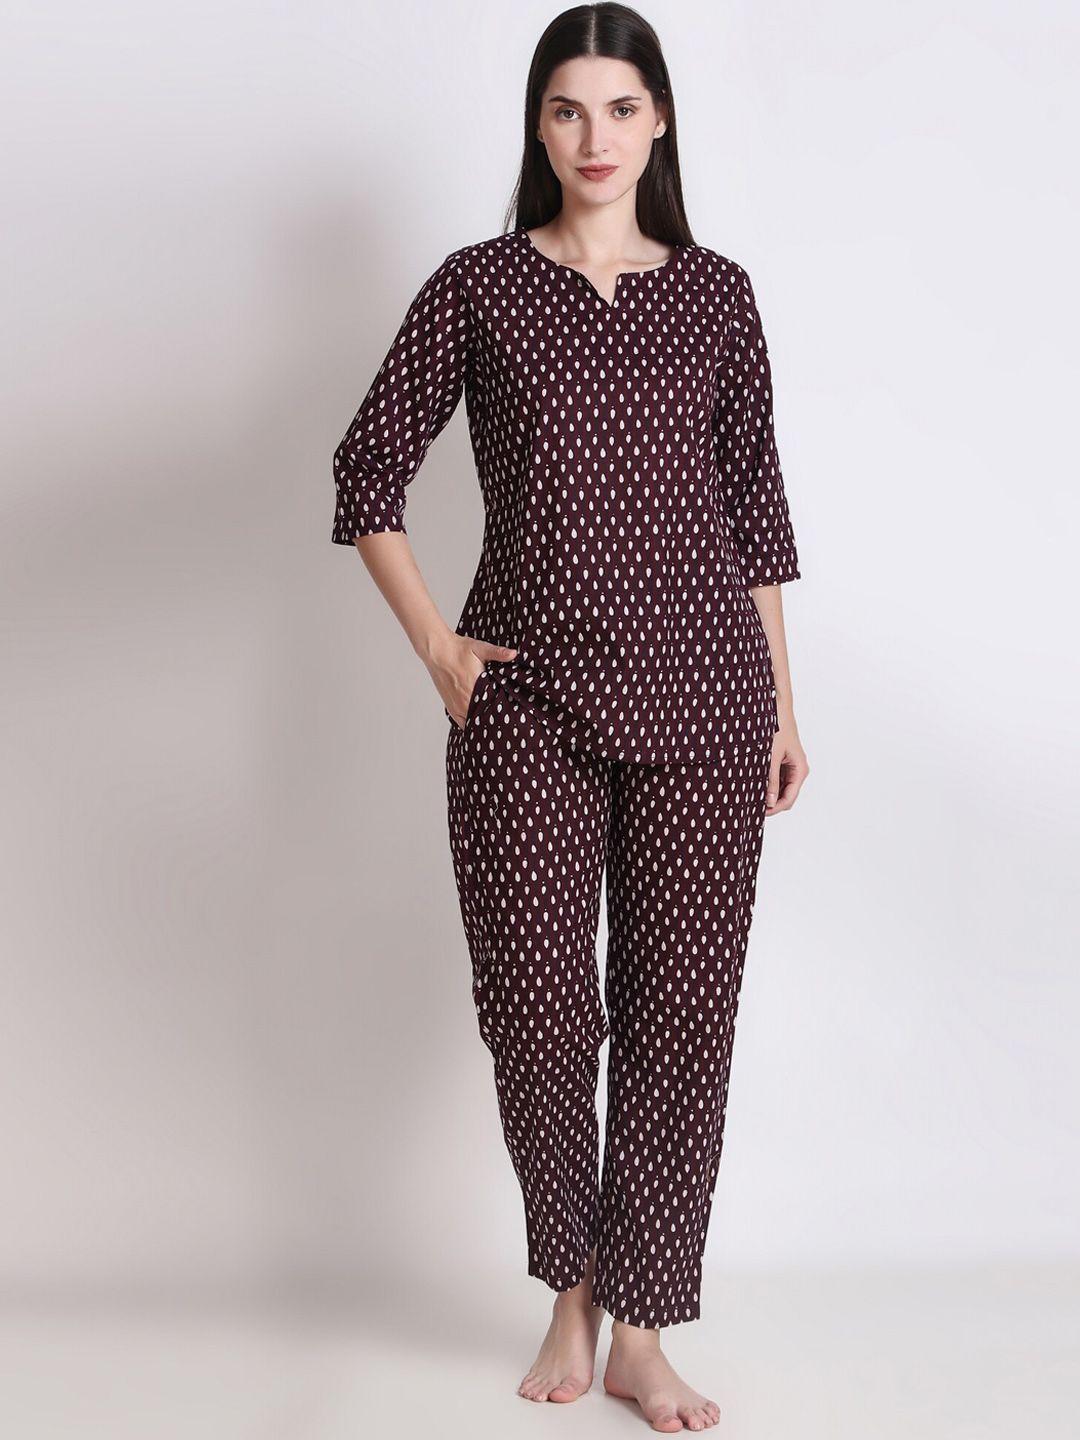 ichaa geometric printed pure cotton night suit